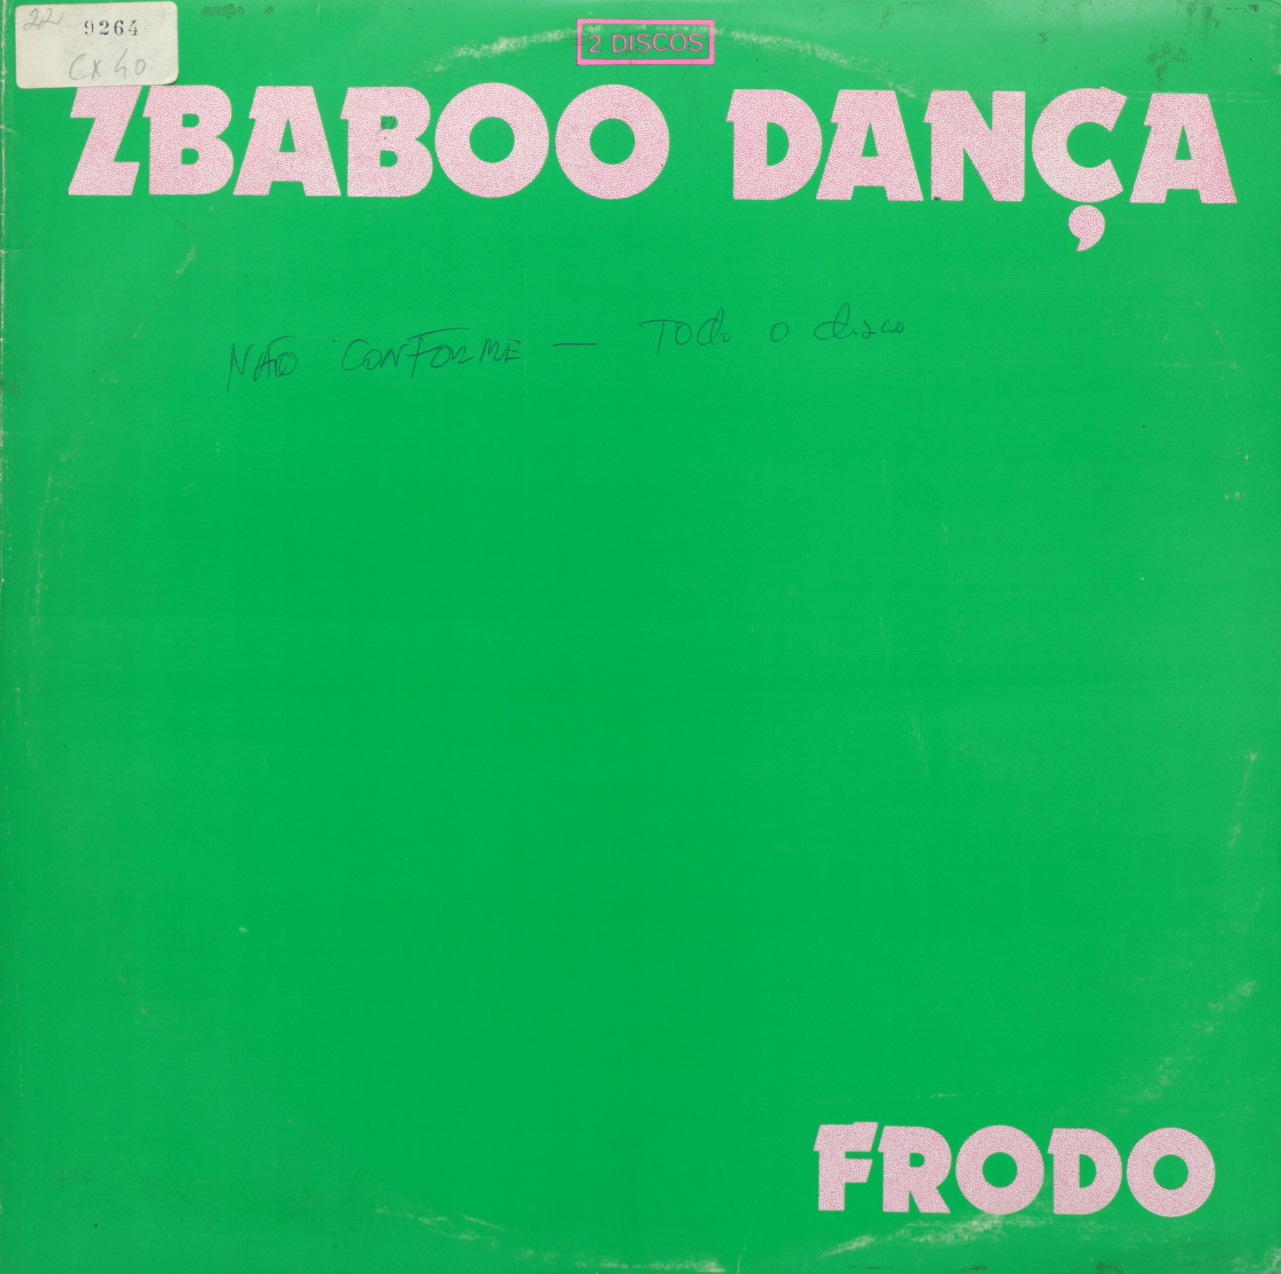 Zbaboo dança